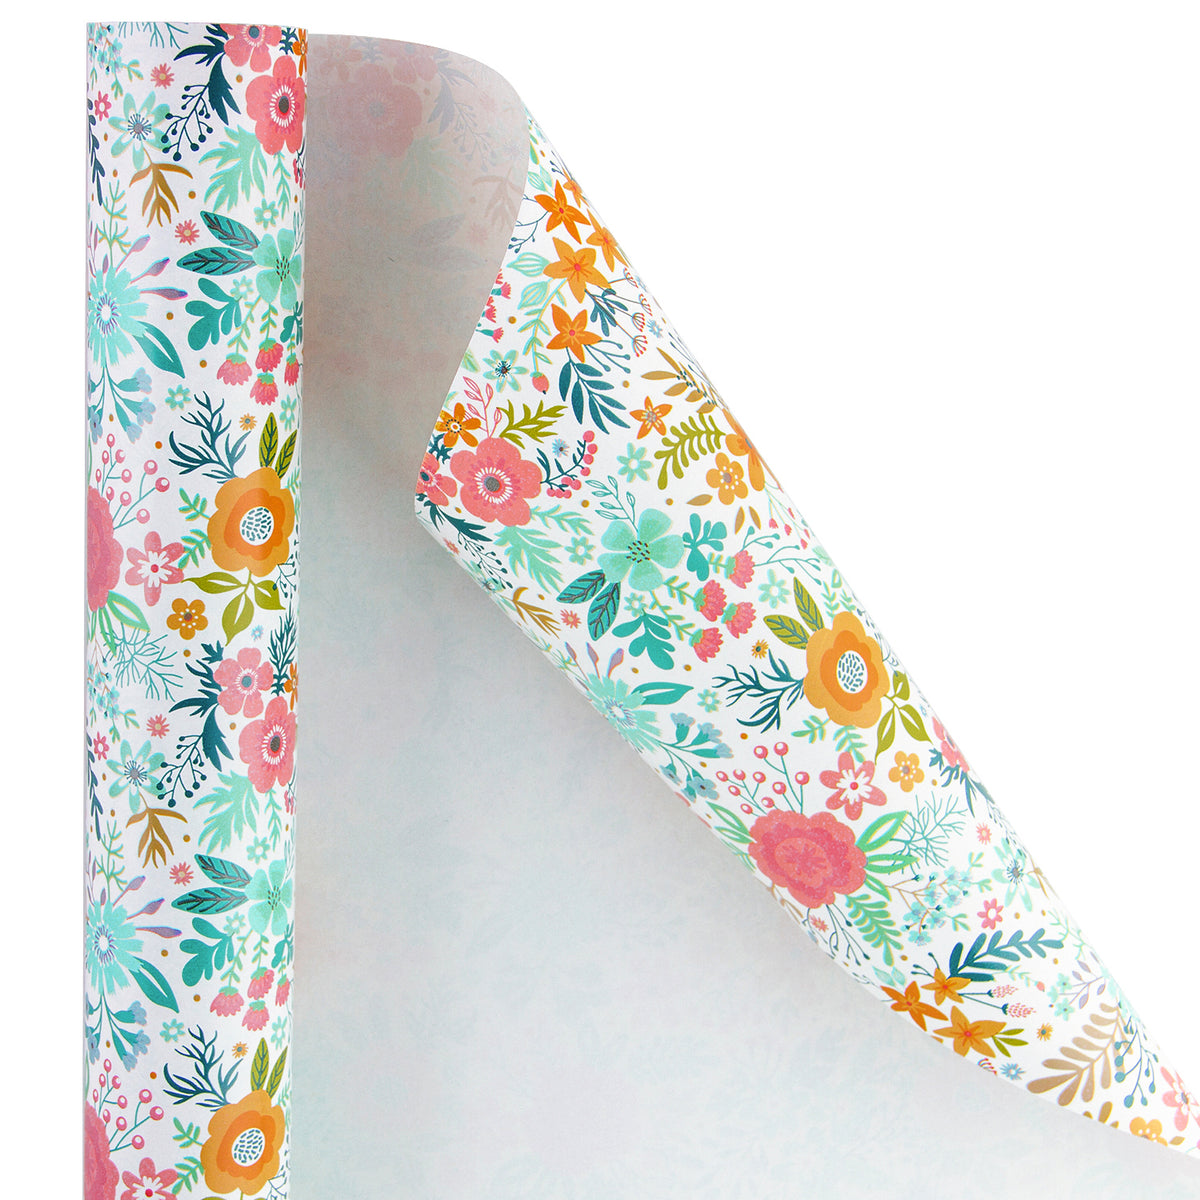 Lovely Floral Tissue Paper